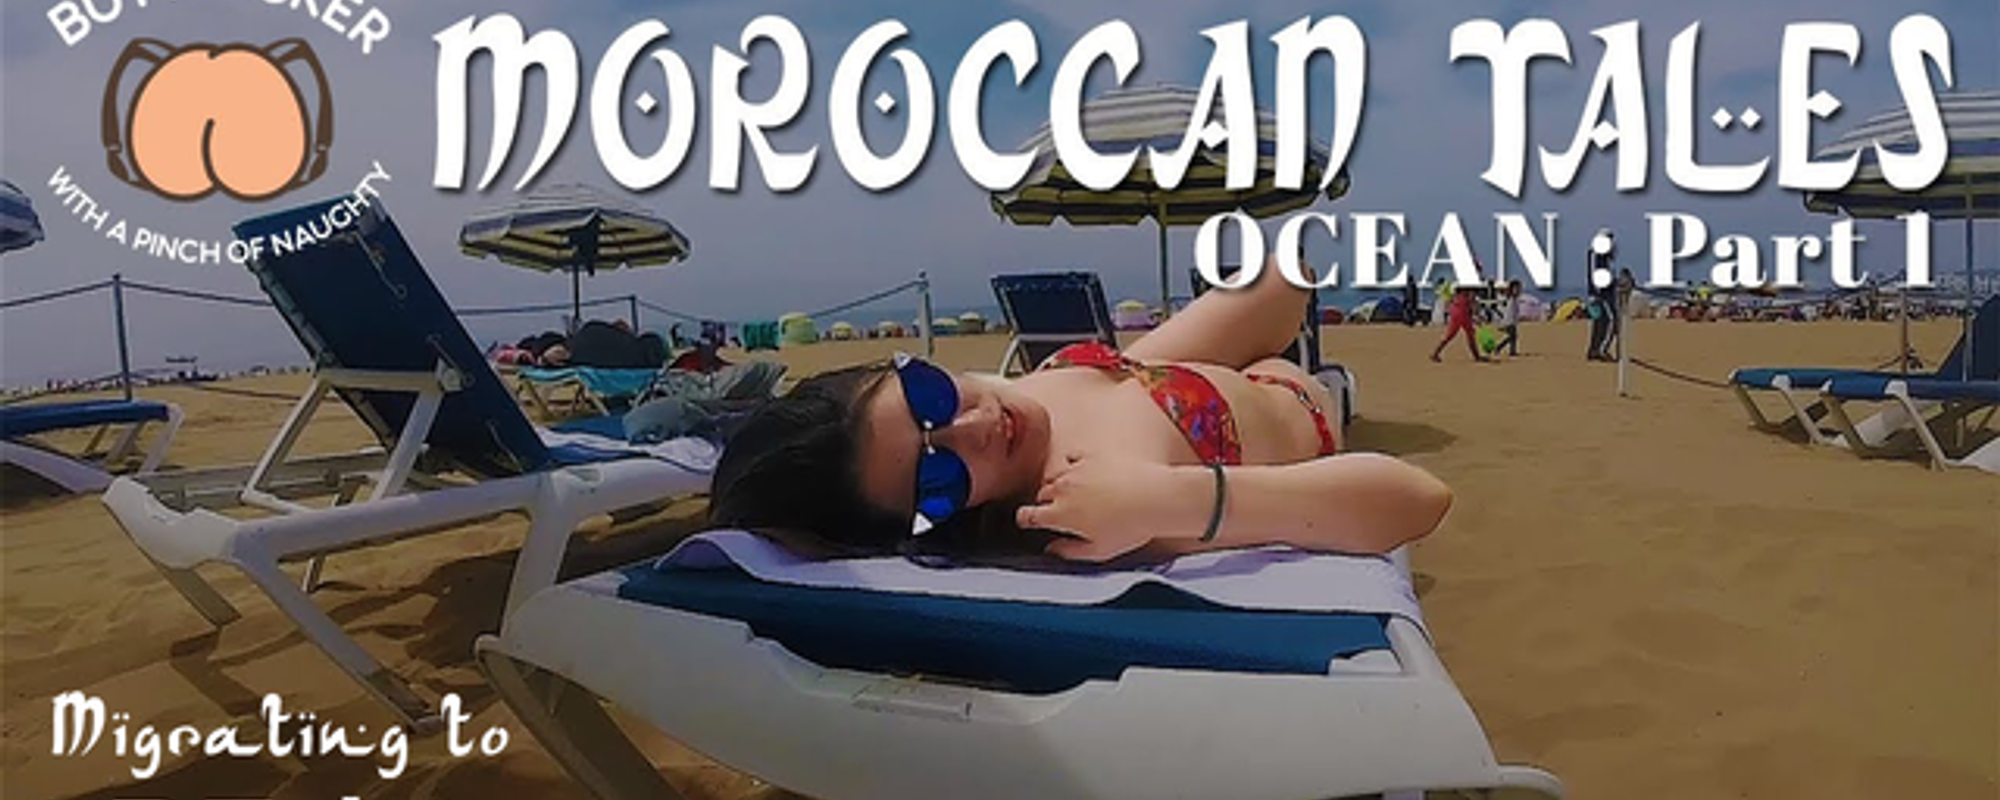 AGADIR : Morrocan Tales ☀ Ocean Part 1